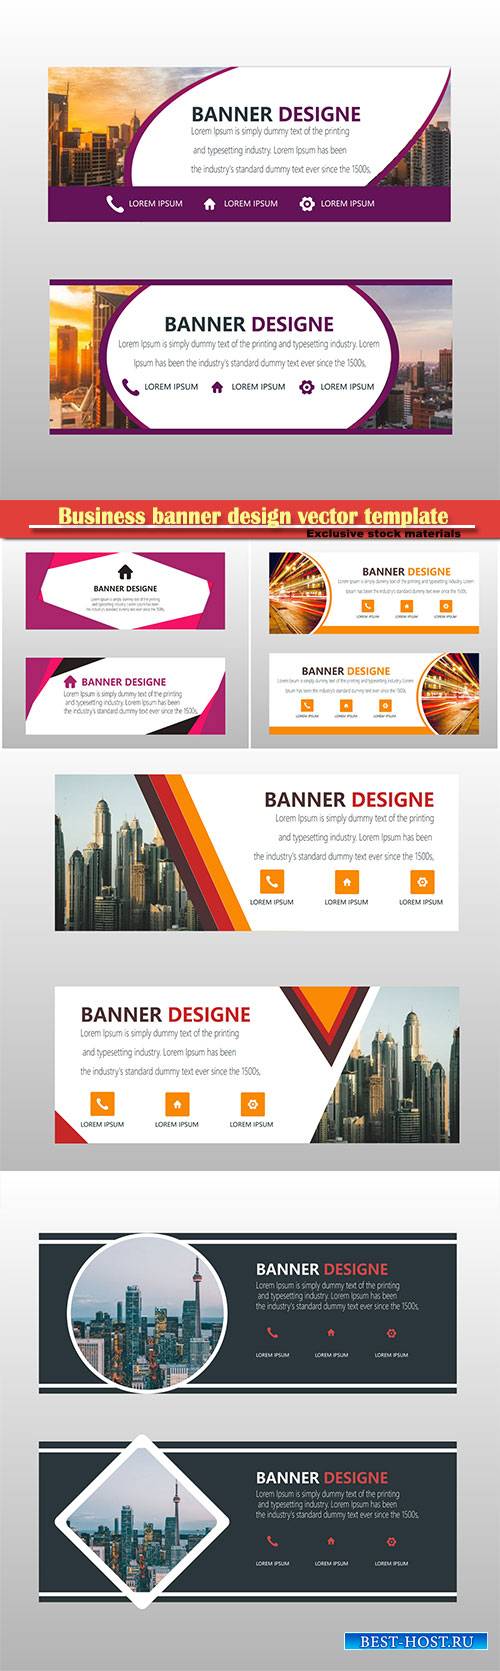 Business banner design vector template